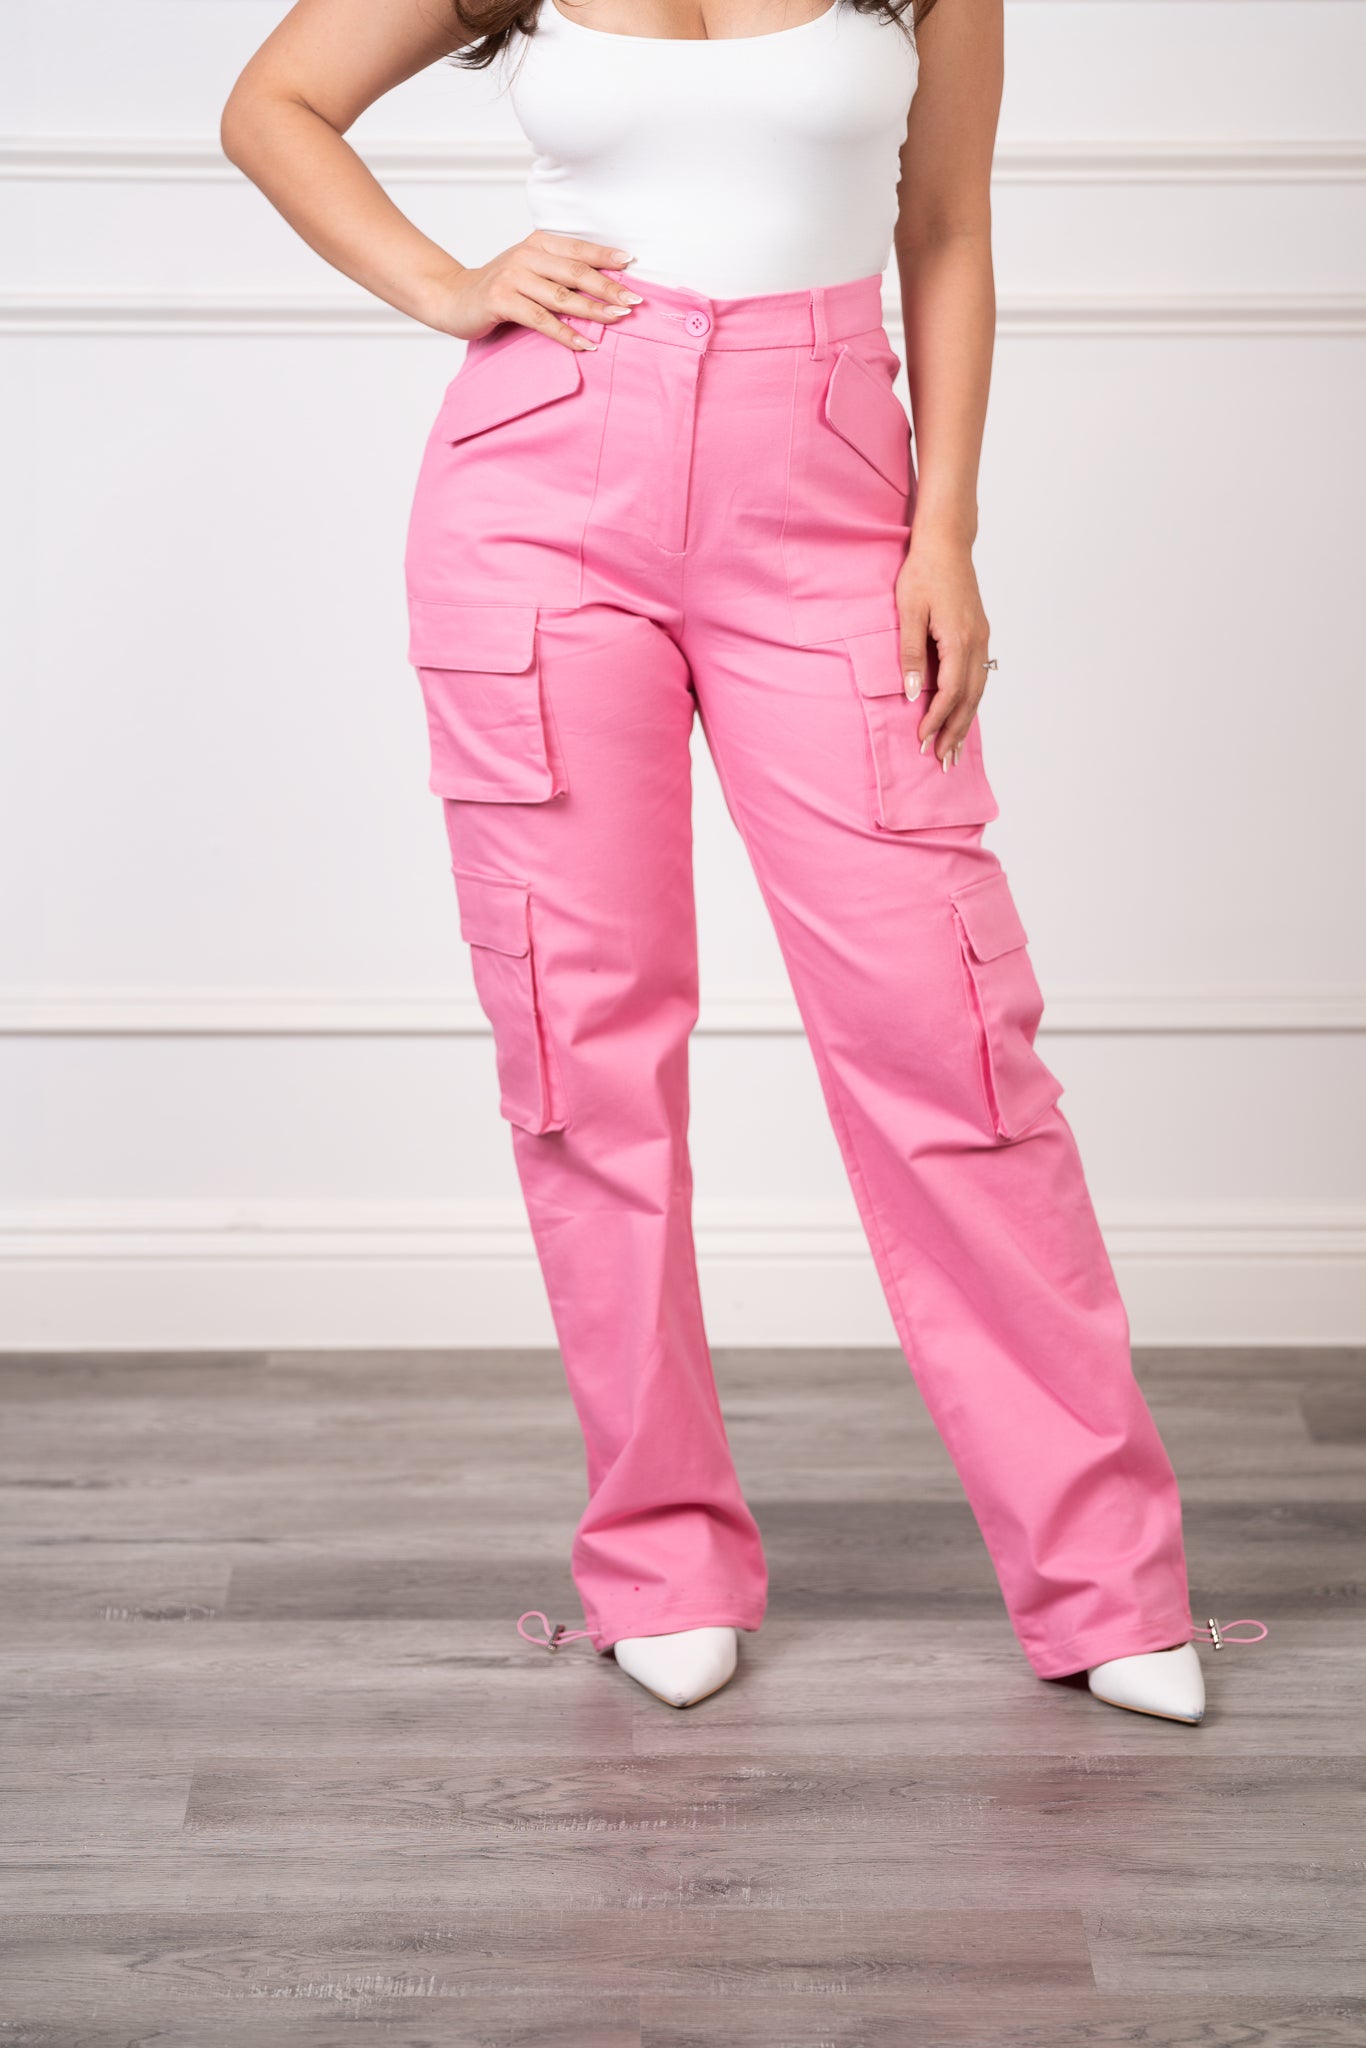 Karol g pink cargo pants – PaulinasFashion